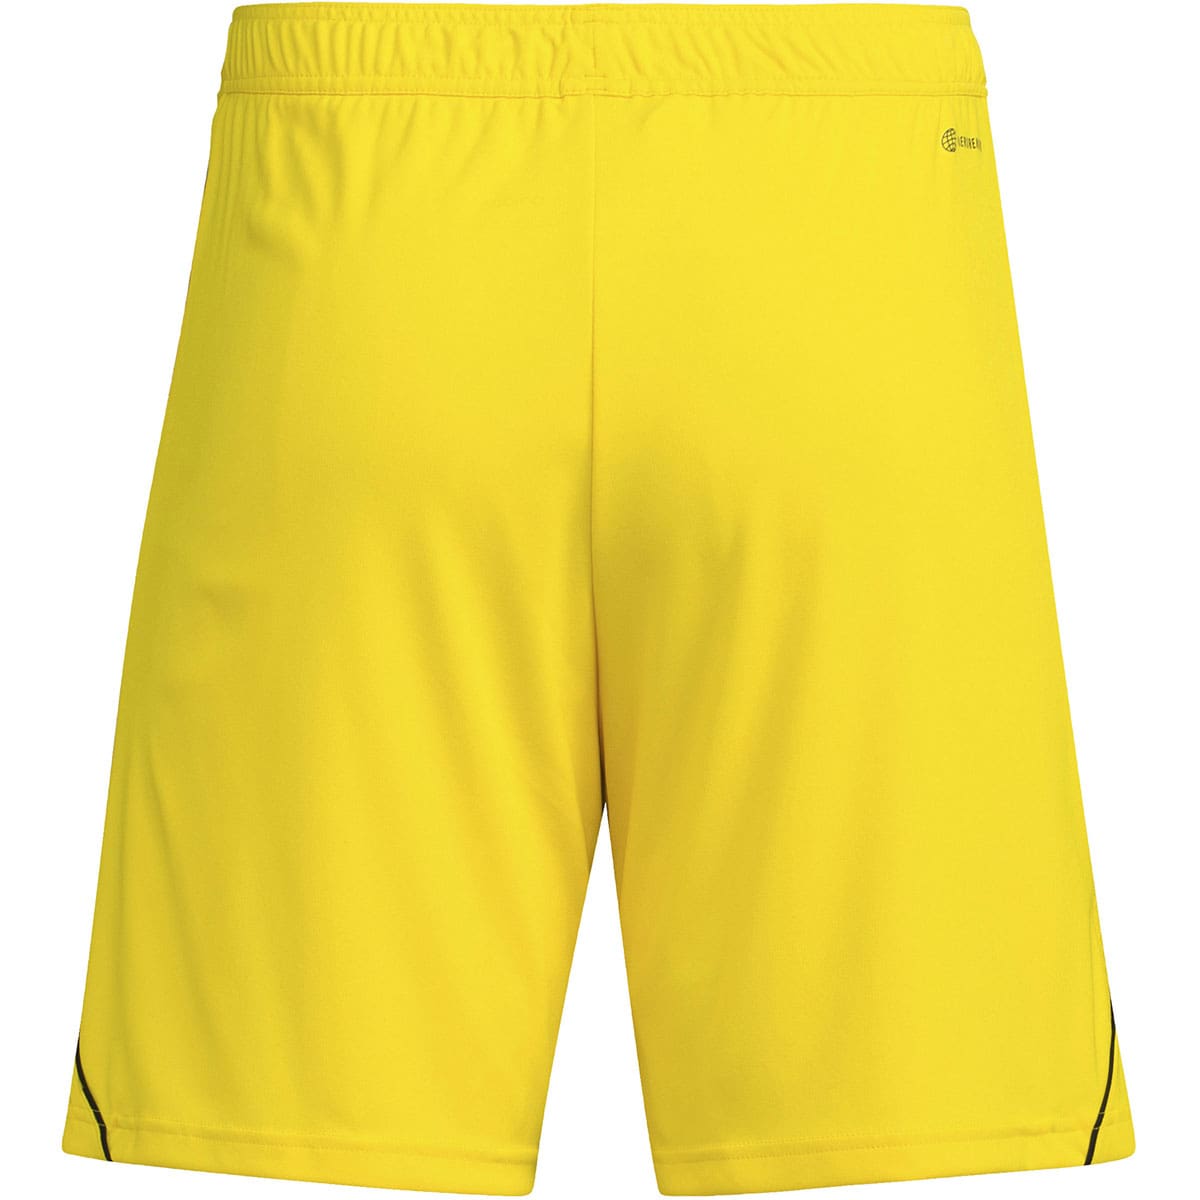 Adidas Herren Shorts Tiro 23 gelb-schwarz